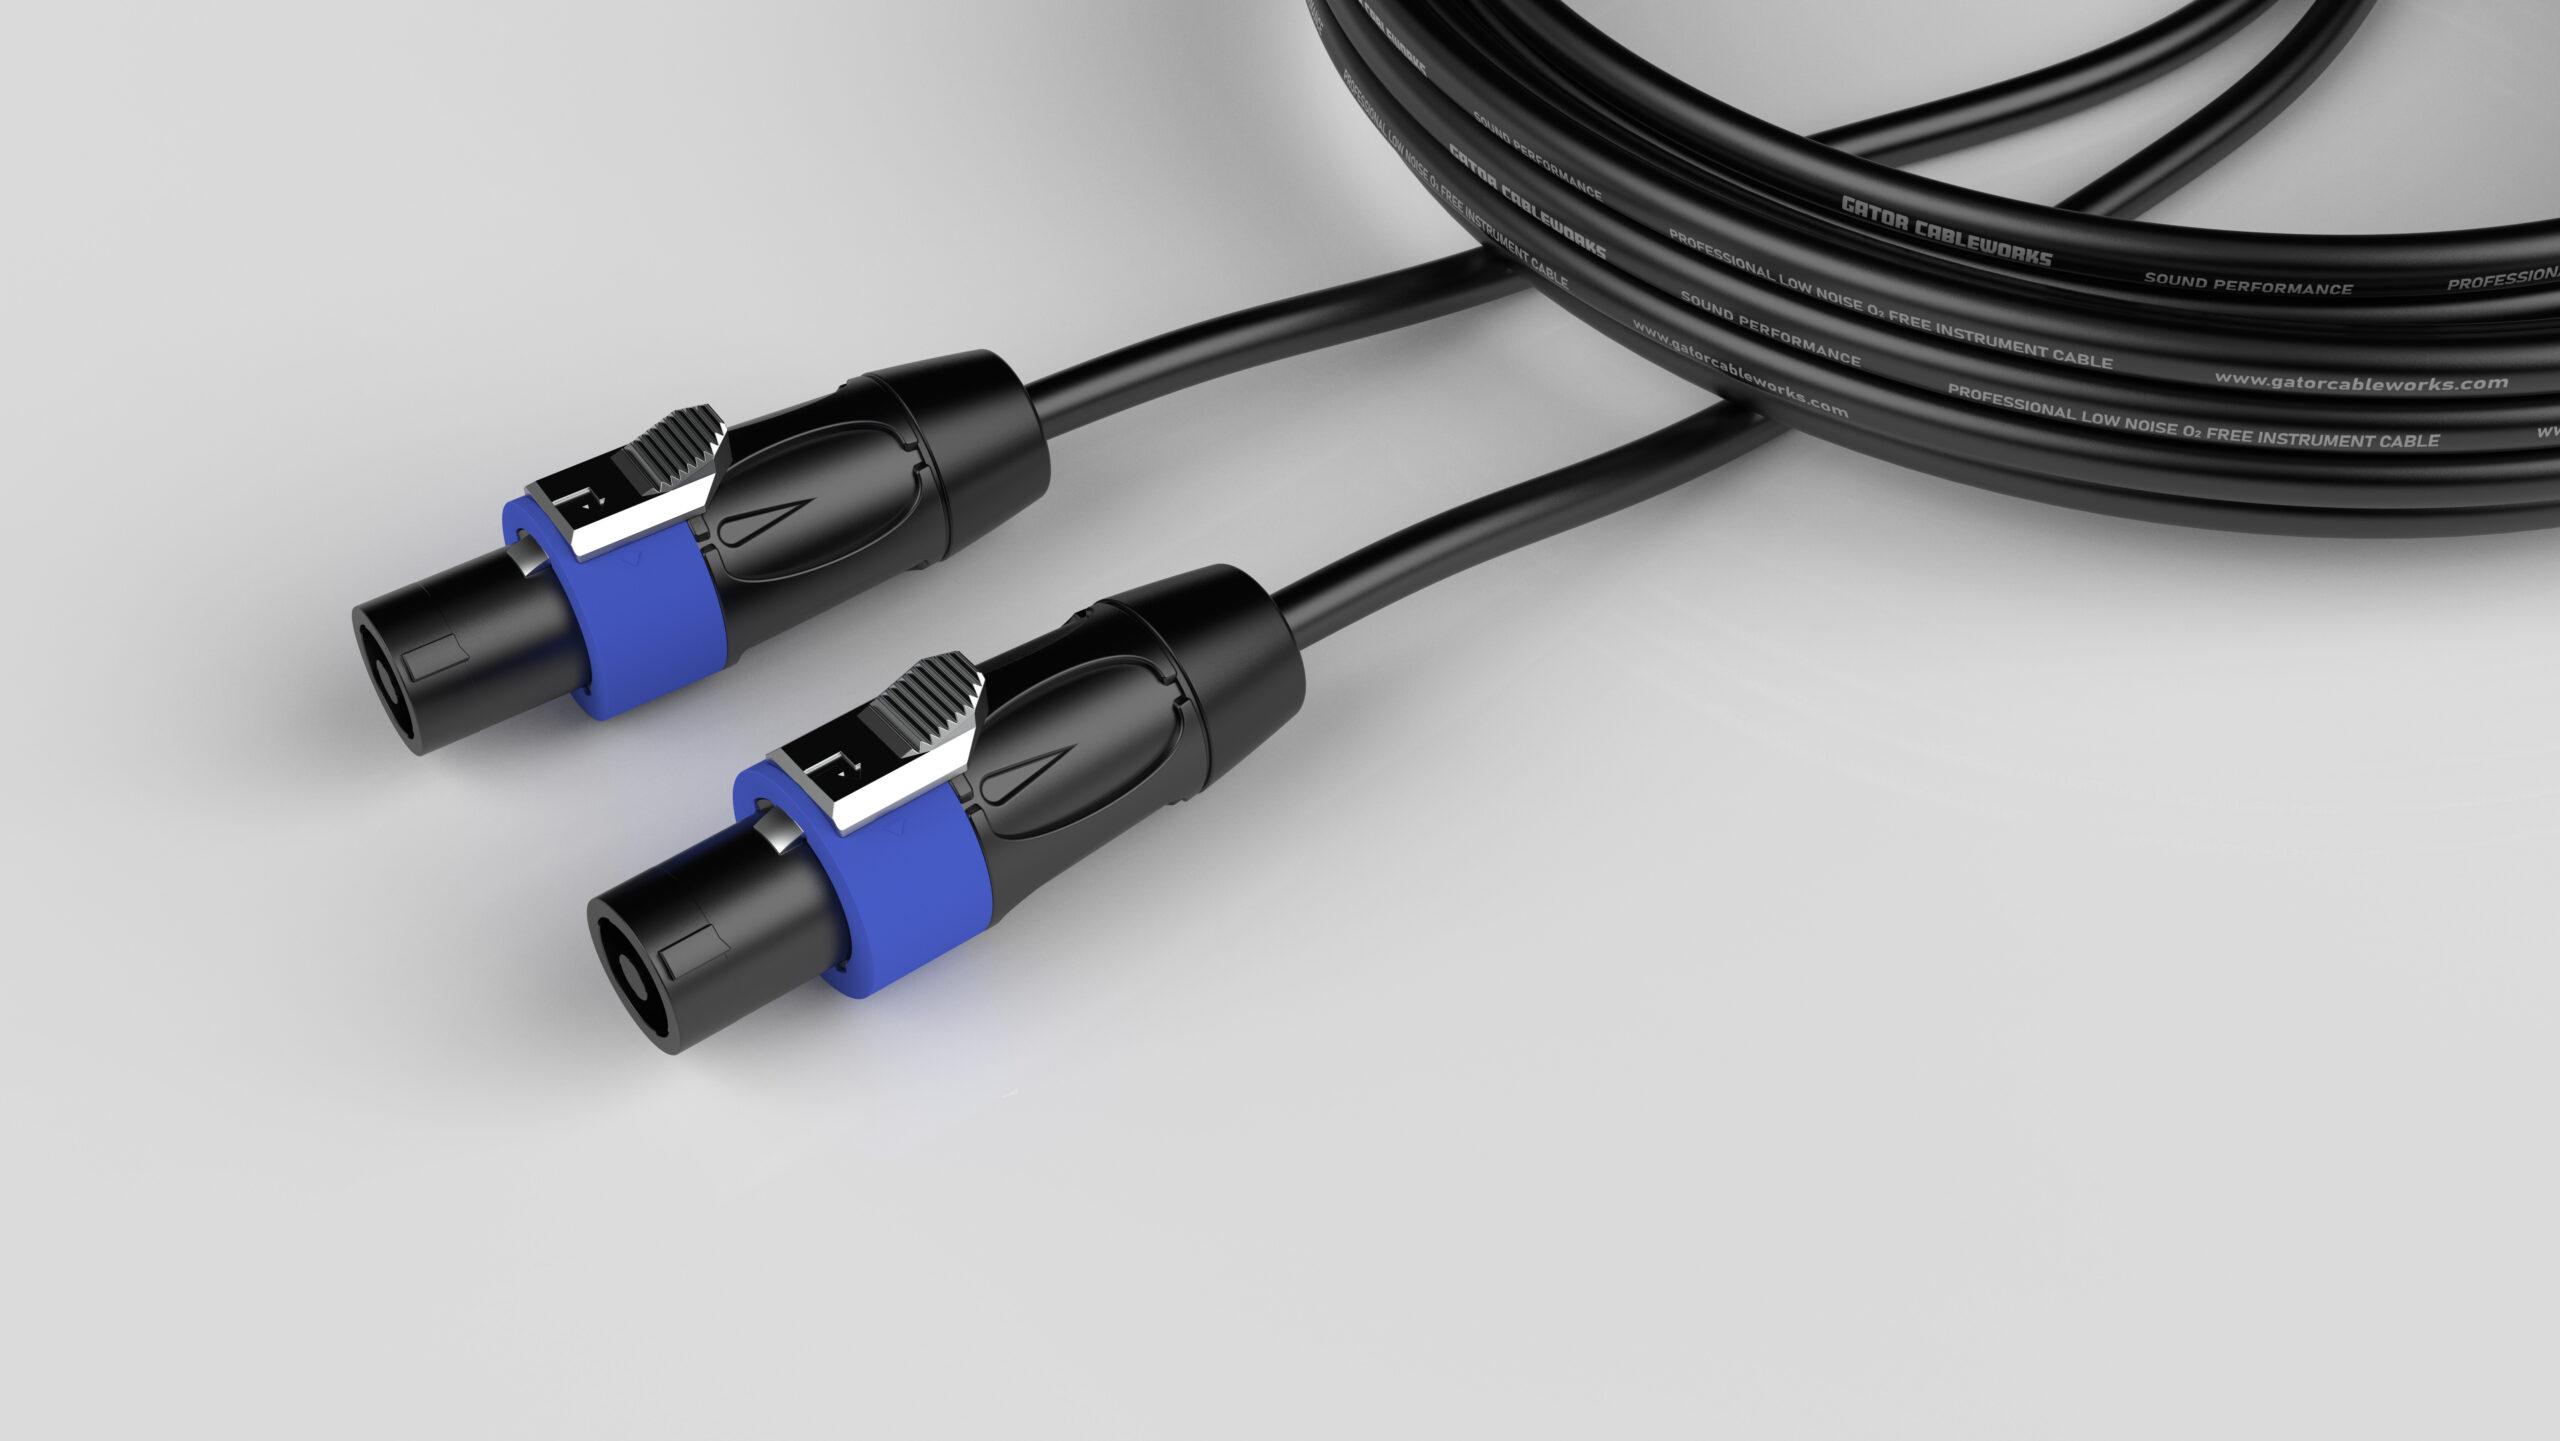 10 Foot Twist Lock Connector Speaker Cable